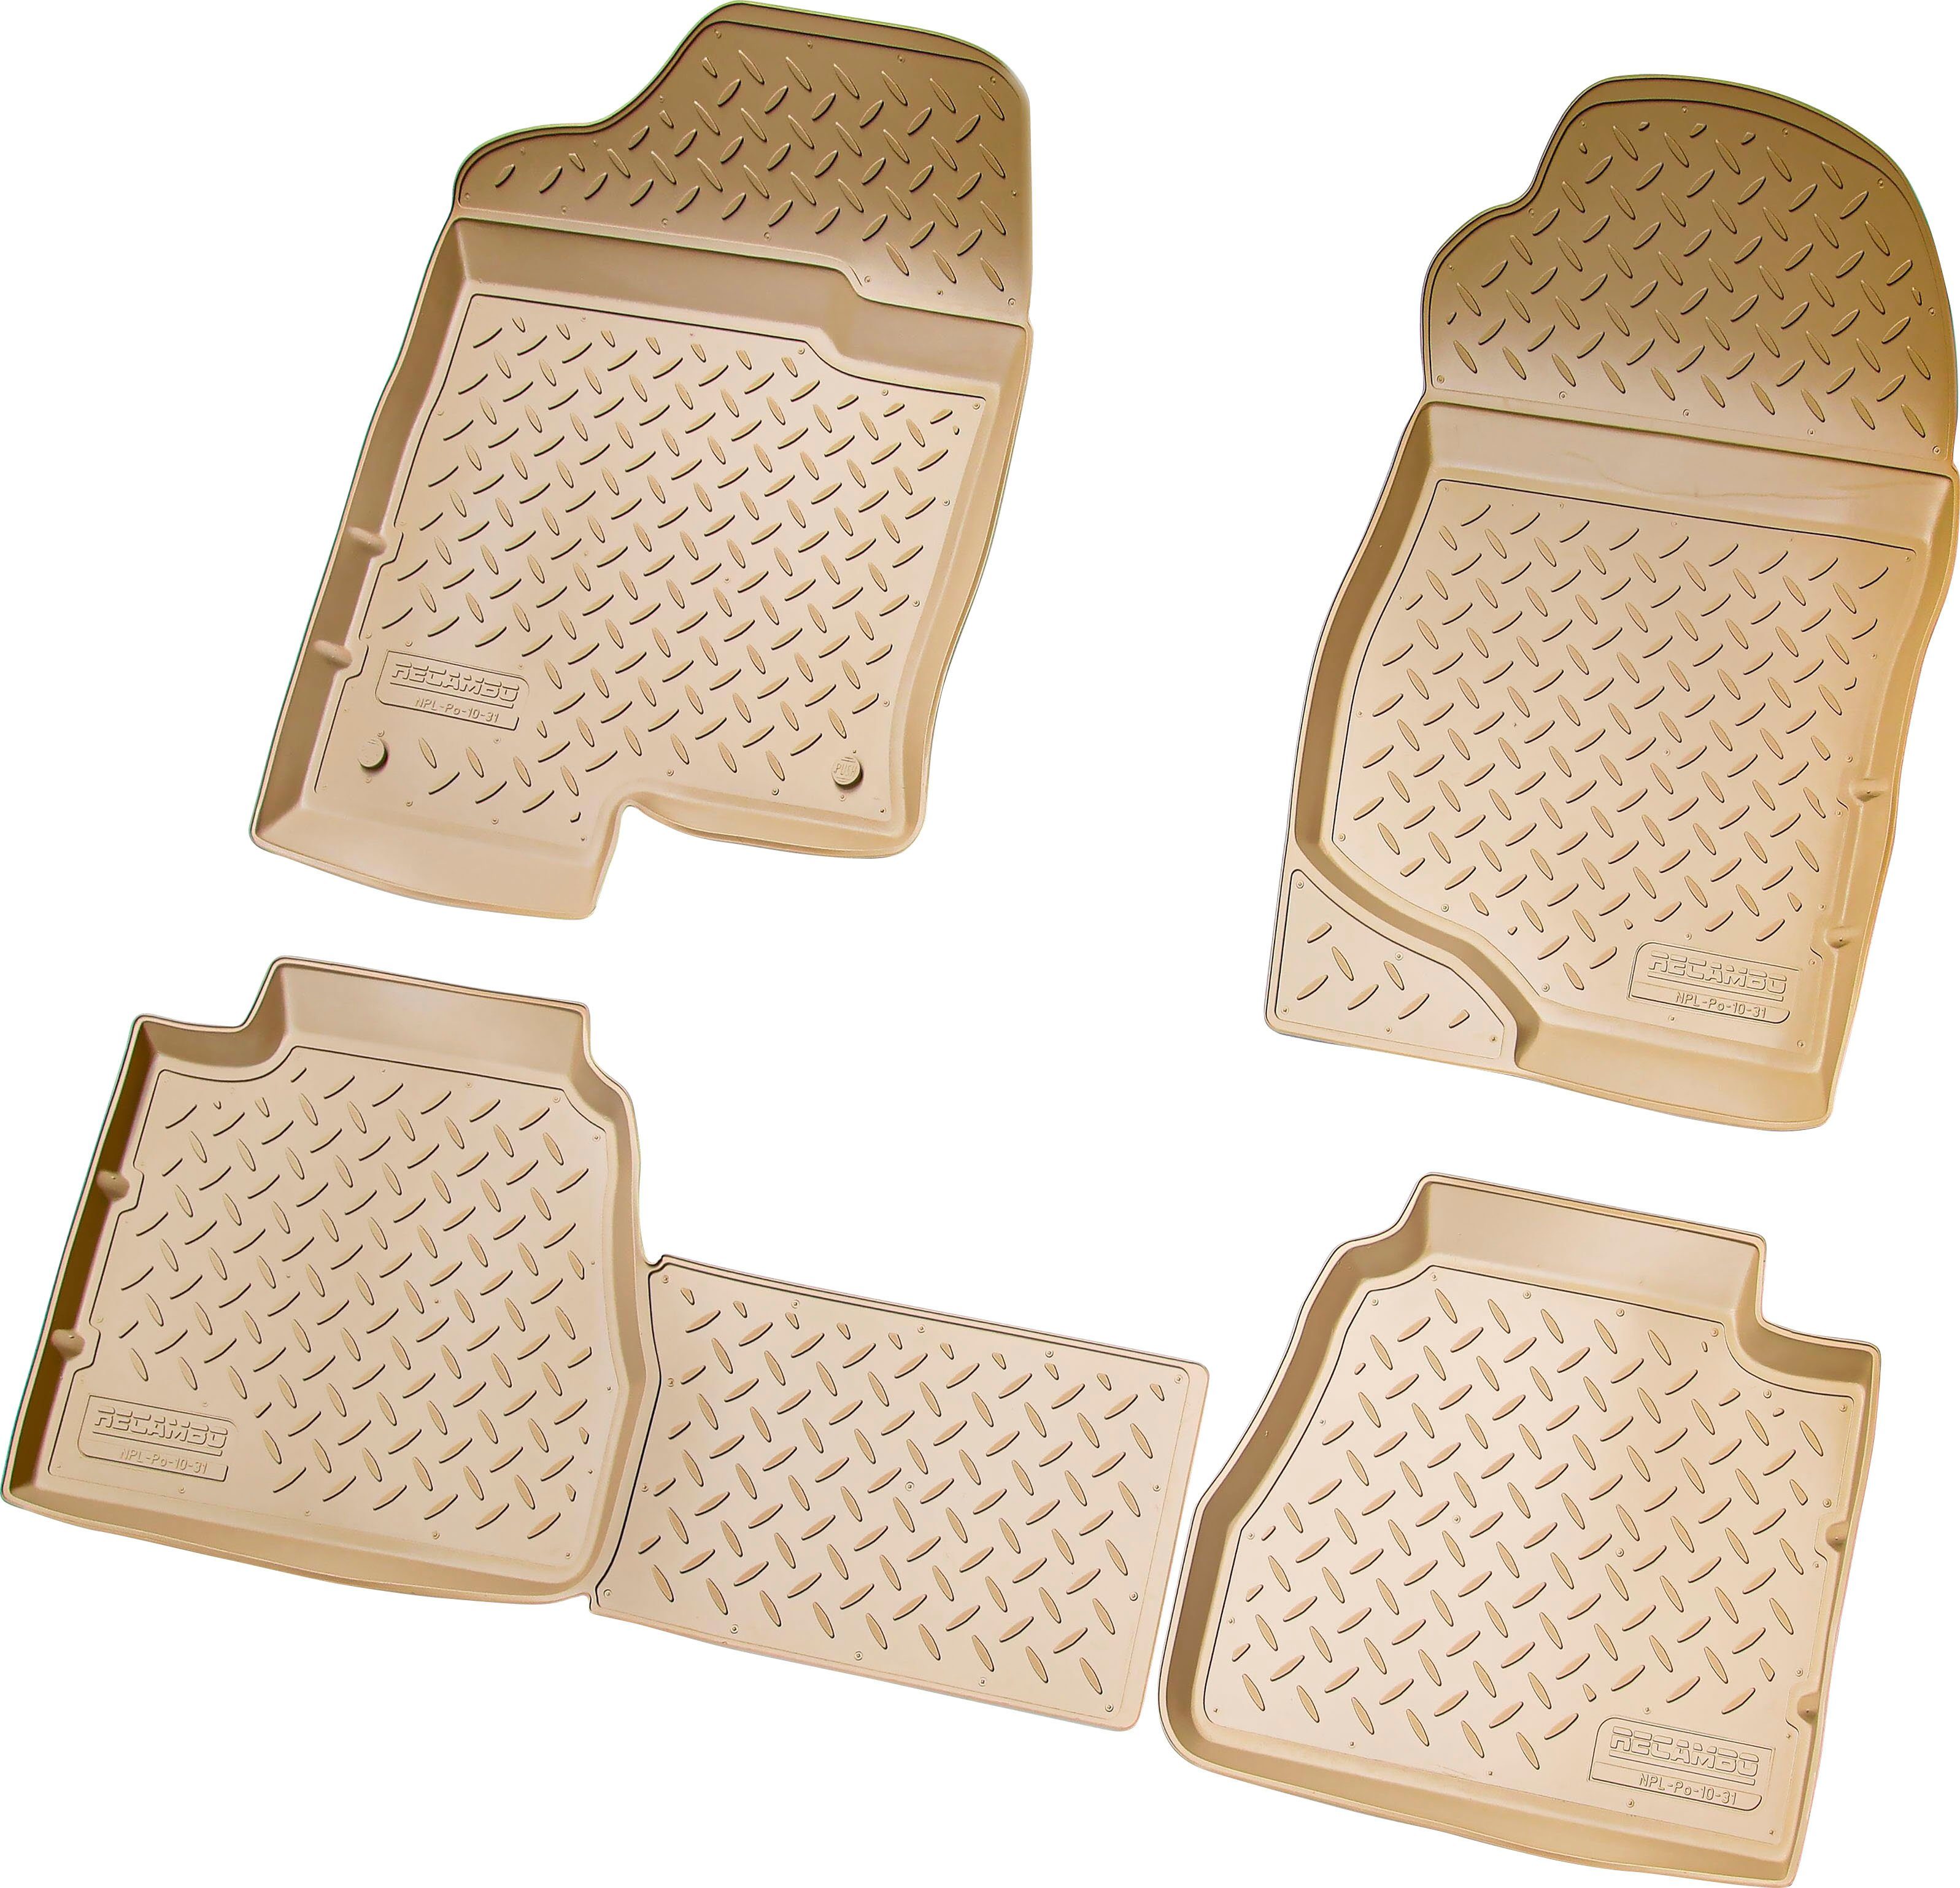 RECAMBO Passform-Fußmatten CustomComforts (4 St), für GMC Yukon, GMT 922 932 2006 - 2014, perfekte Passform